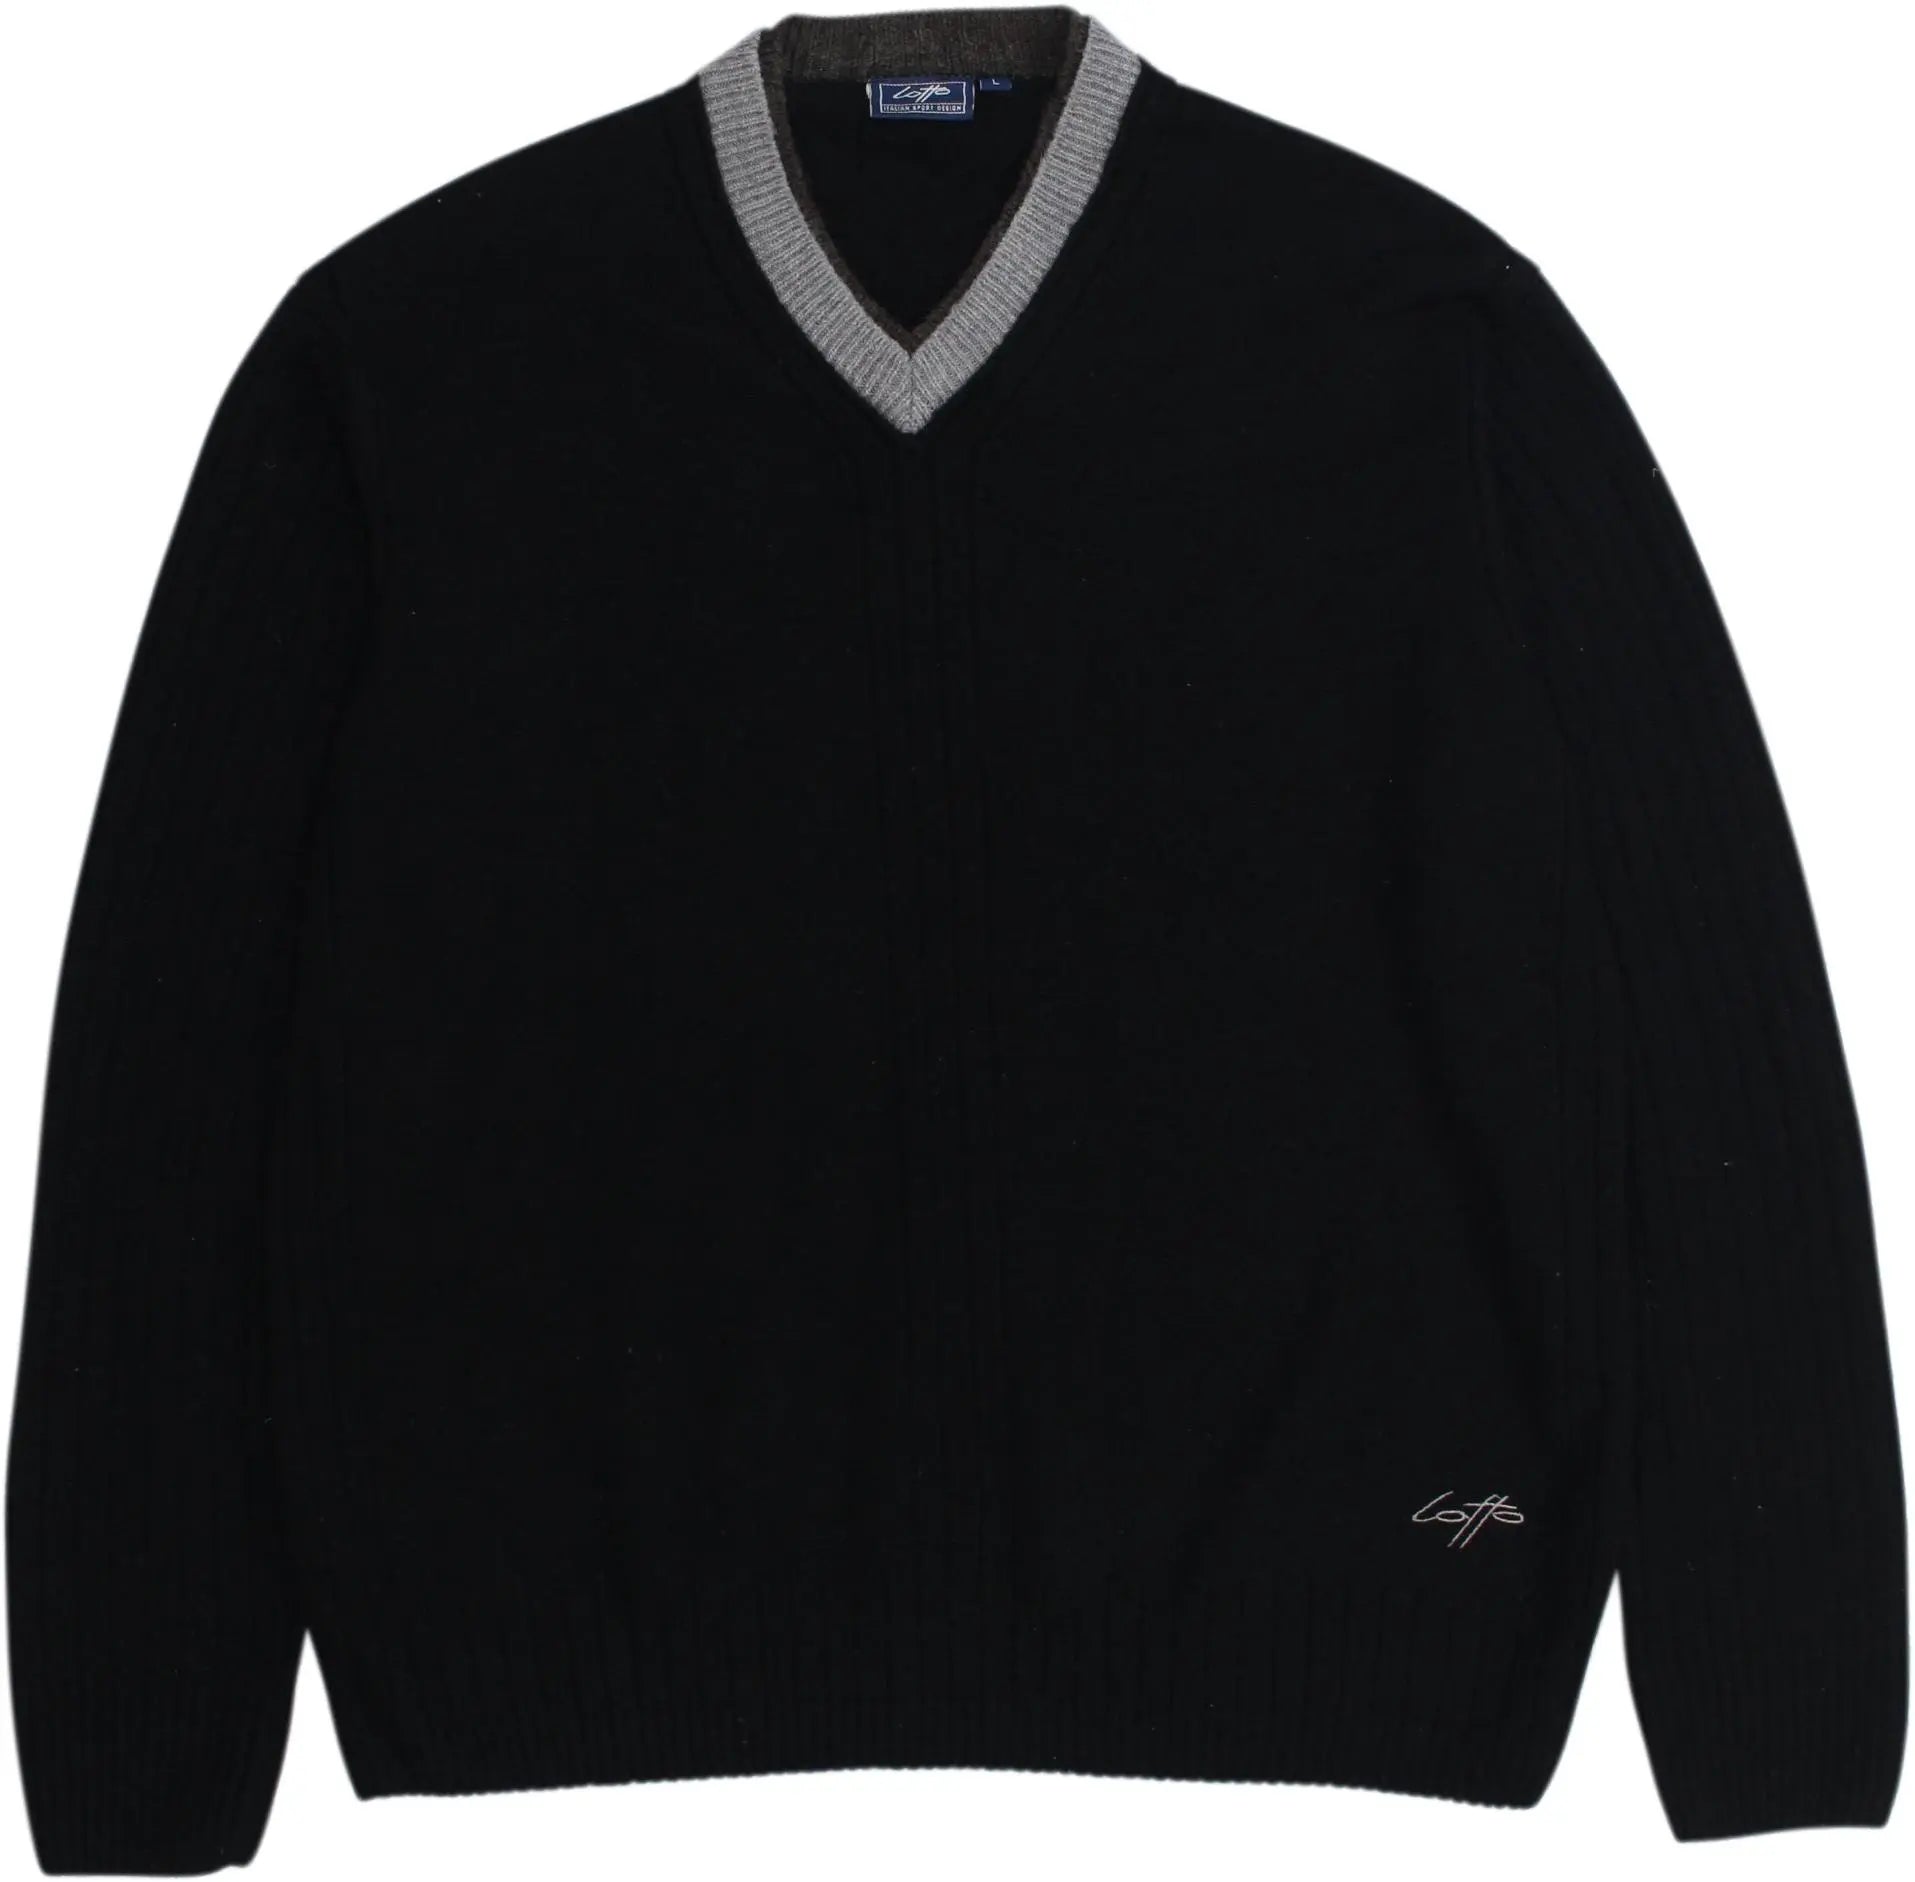 Lotto - Black Wool Blend V-Neck Jumper- ThriftTale.com - Vintage and second handclothing